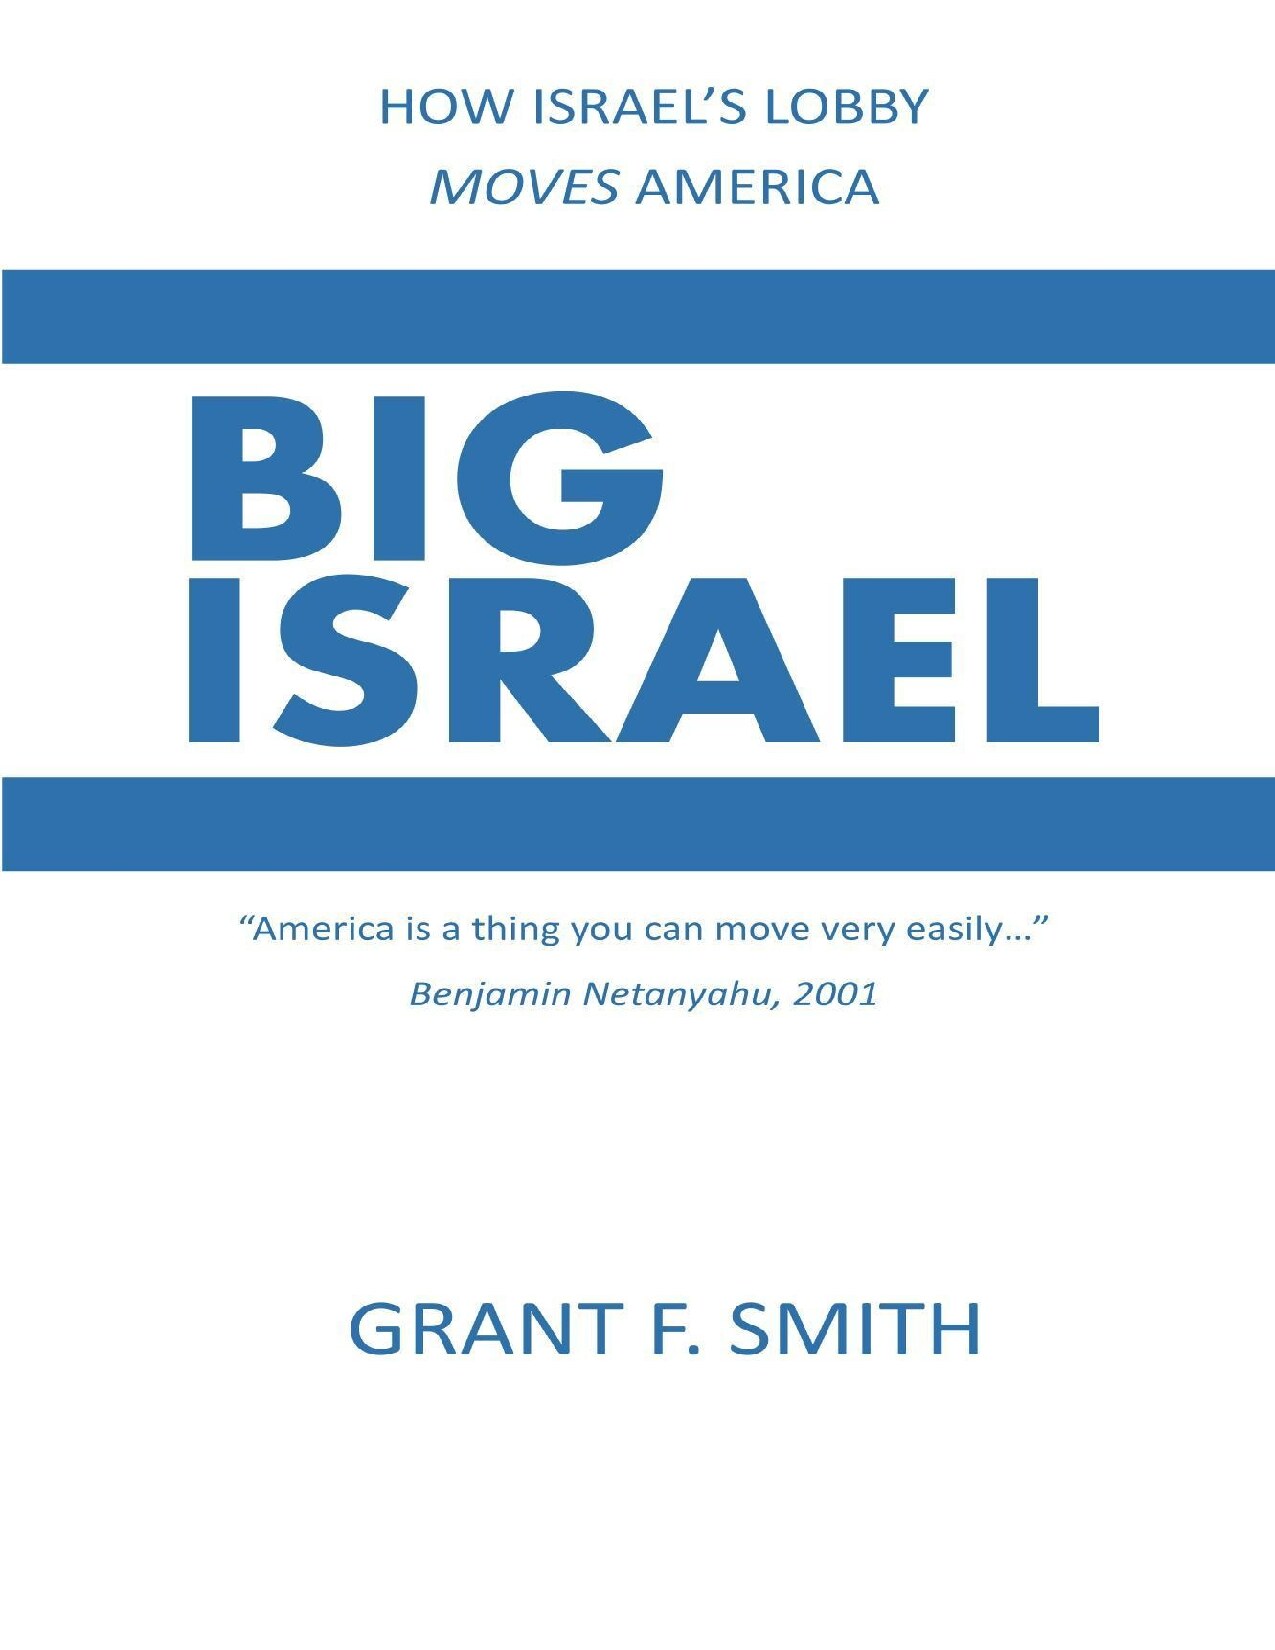 Big Israel: How Israel’s Lobby Moves America